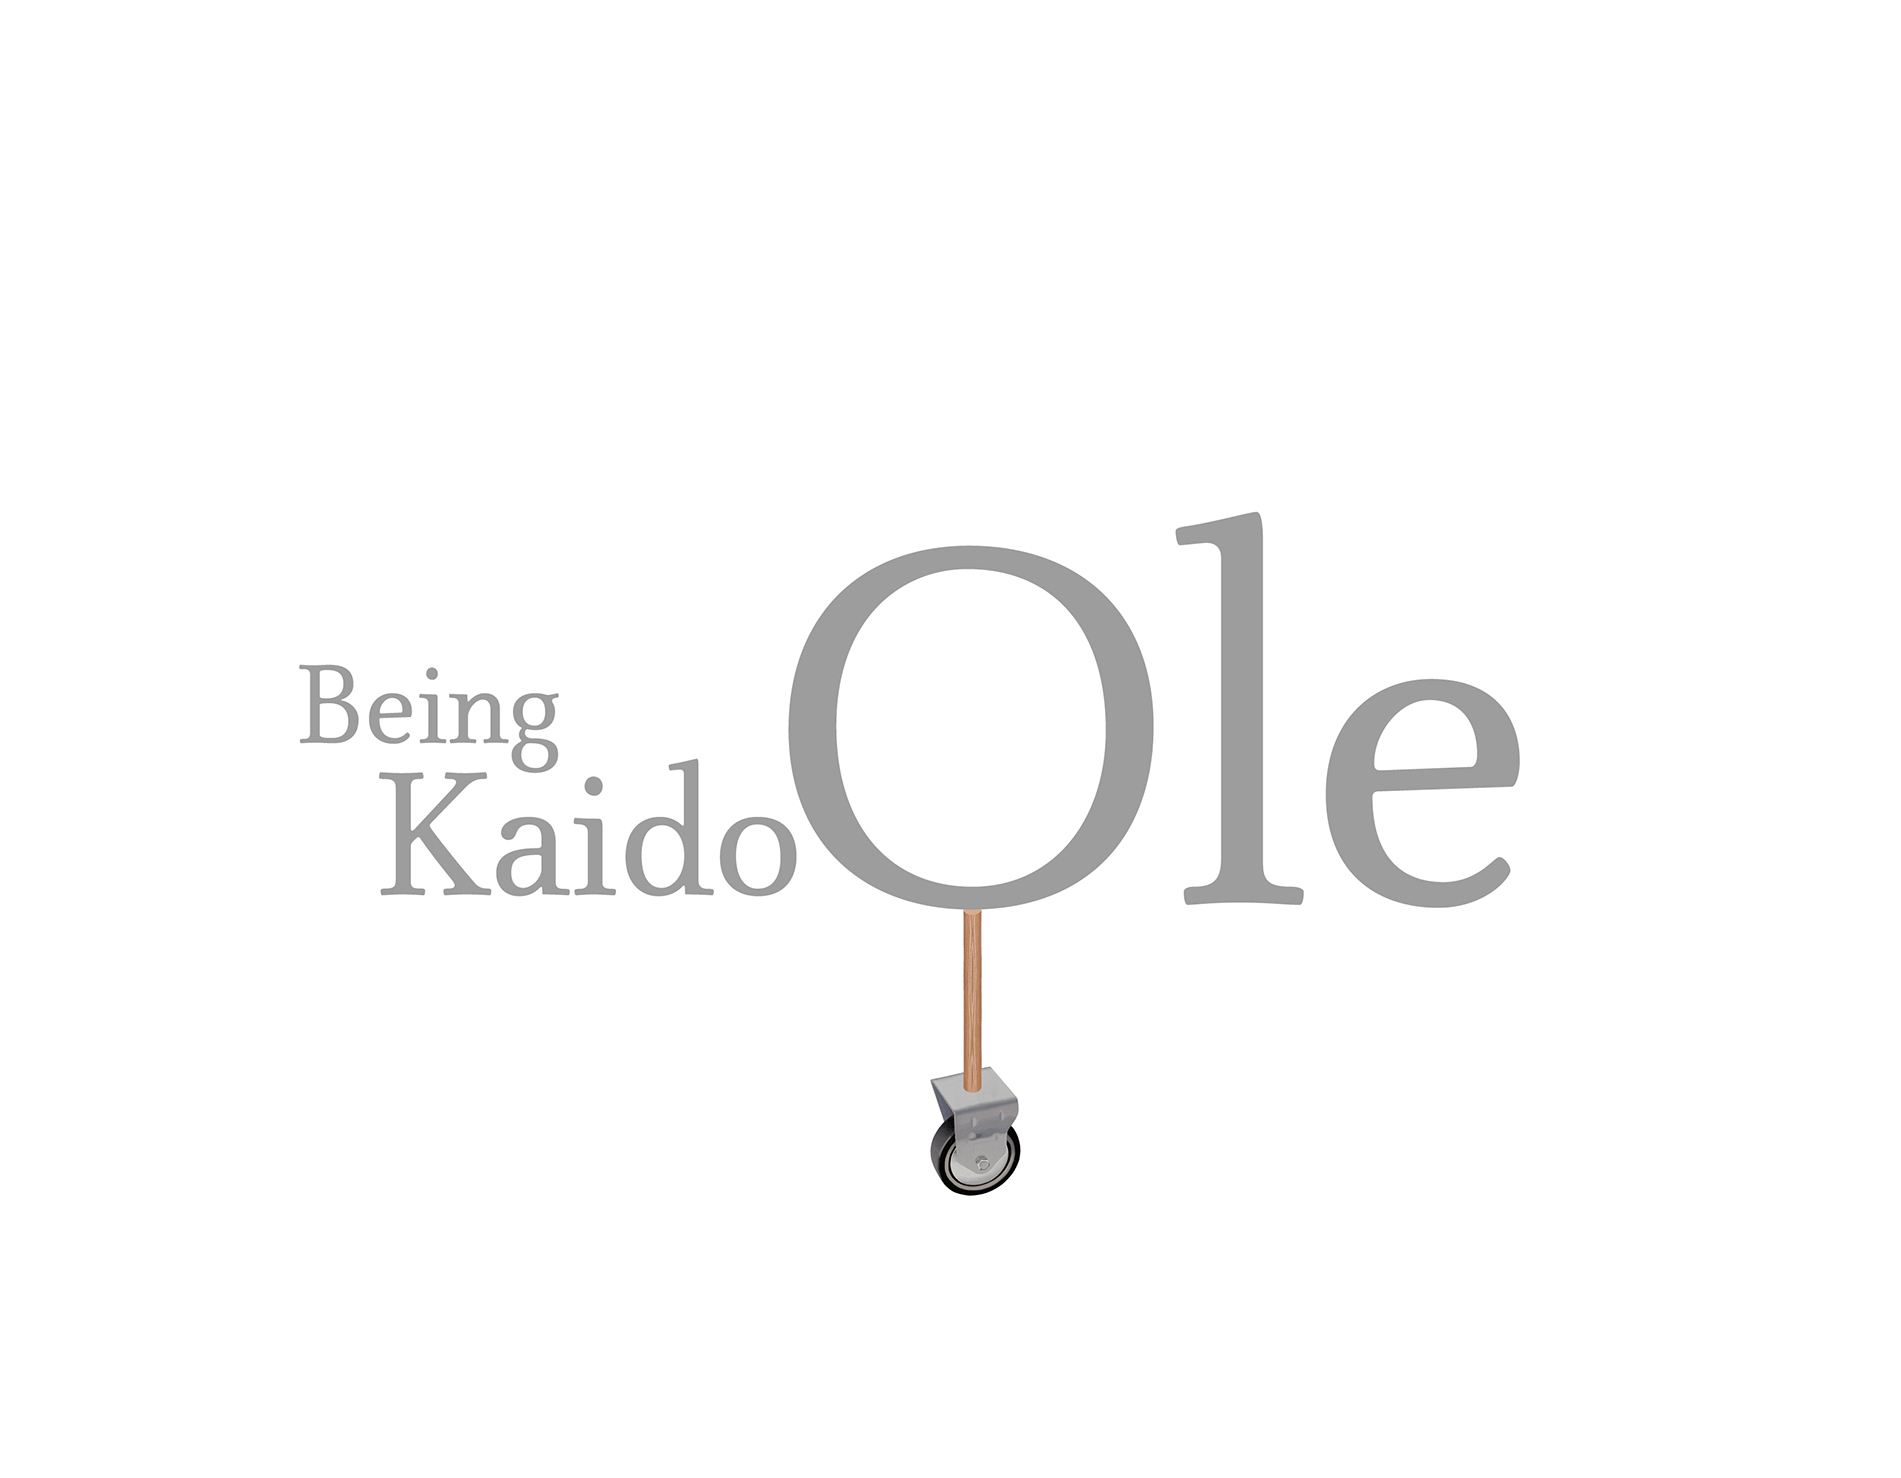 Nordea – Being Kaido Ole